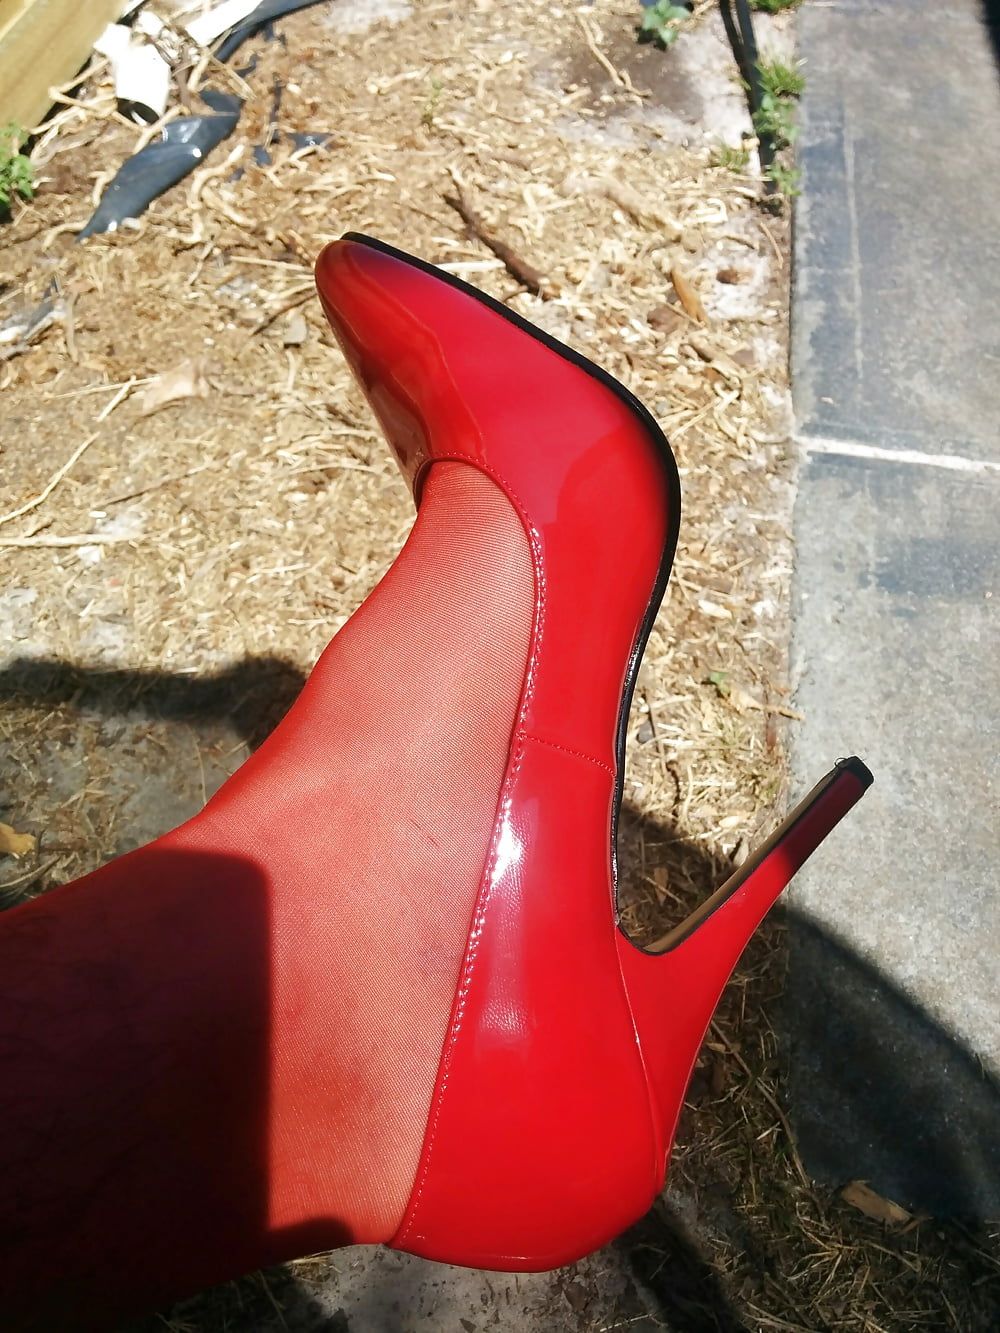 New heels: Red 6' Pump Shoe. Like? #2